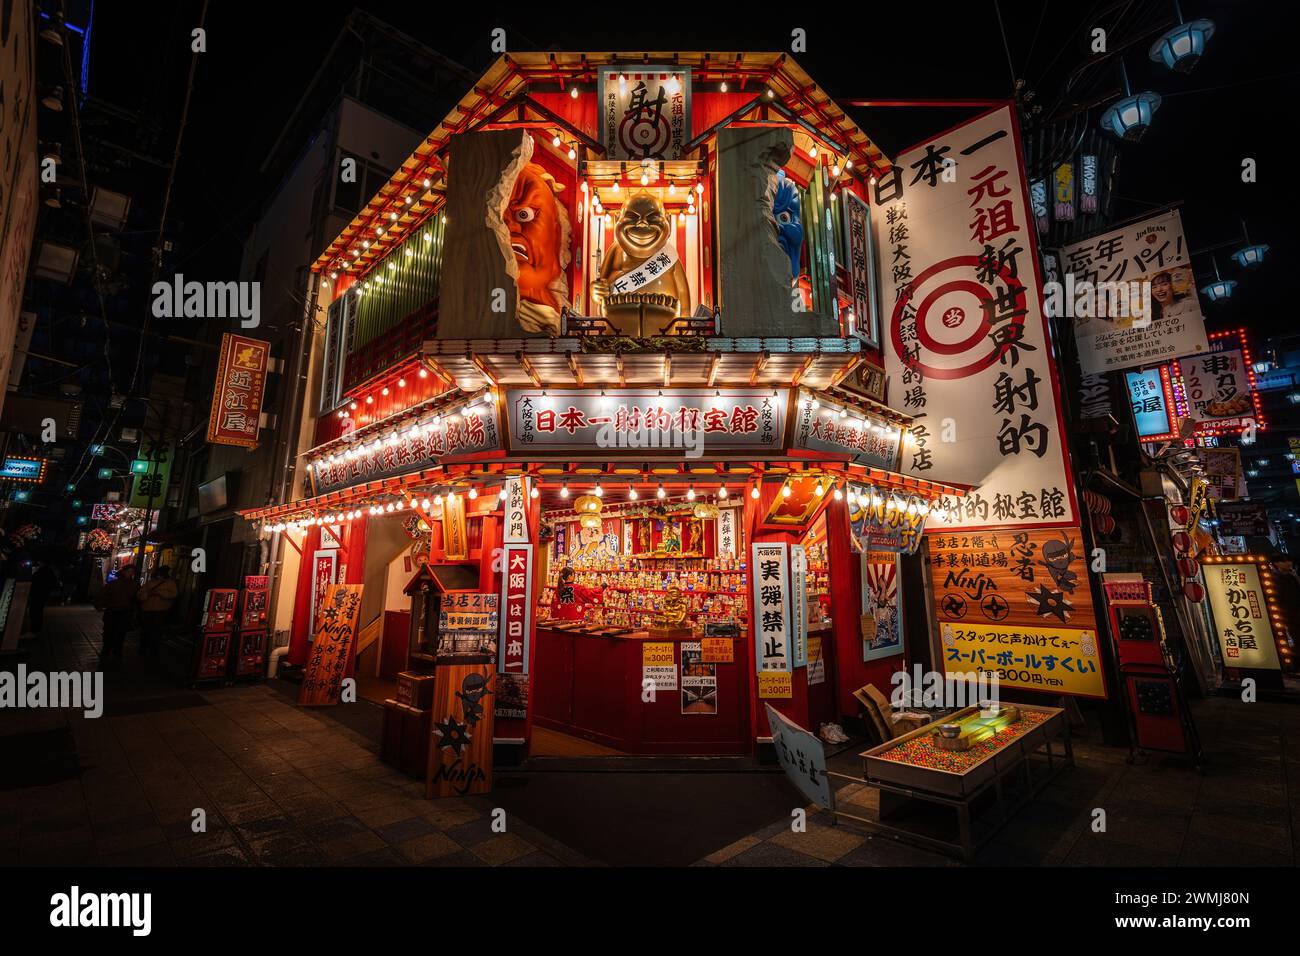 Shooting gallery illuminated at night in the Shinsekai 'New World' district of Osaka, Japan. Stock Photo